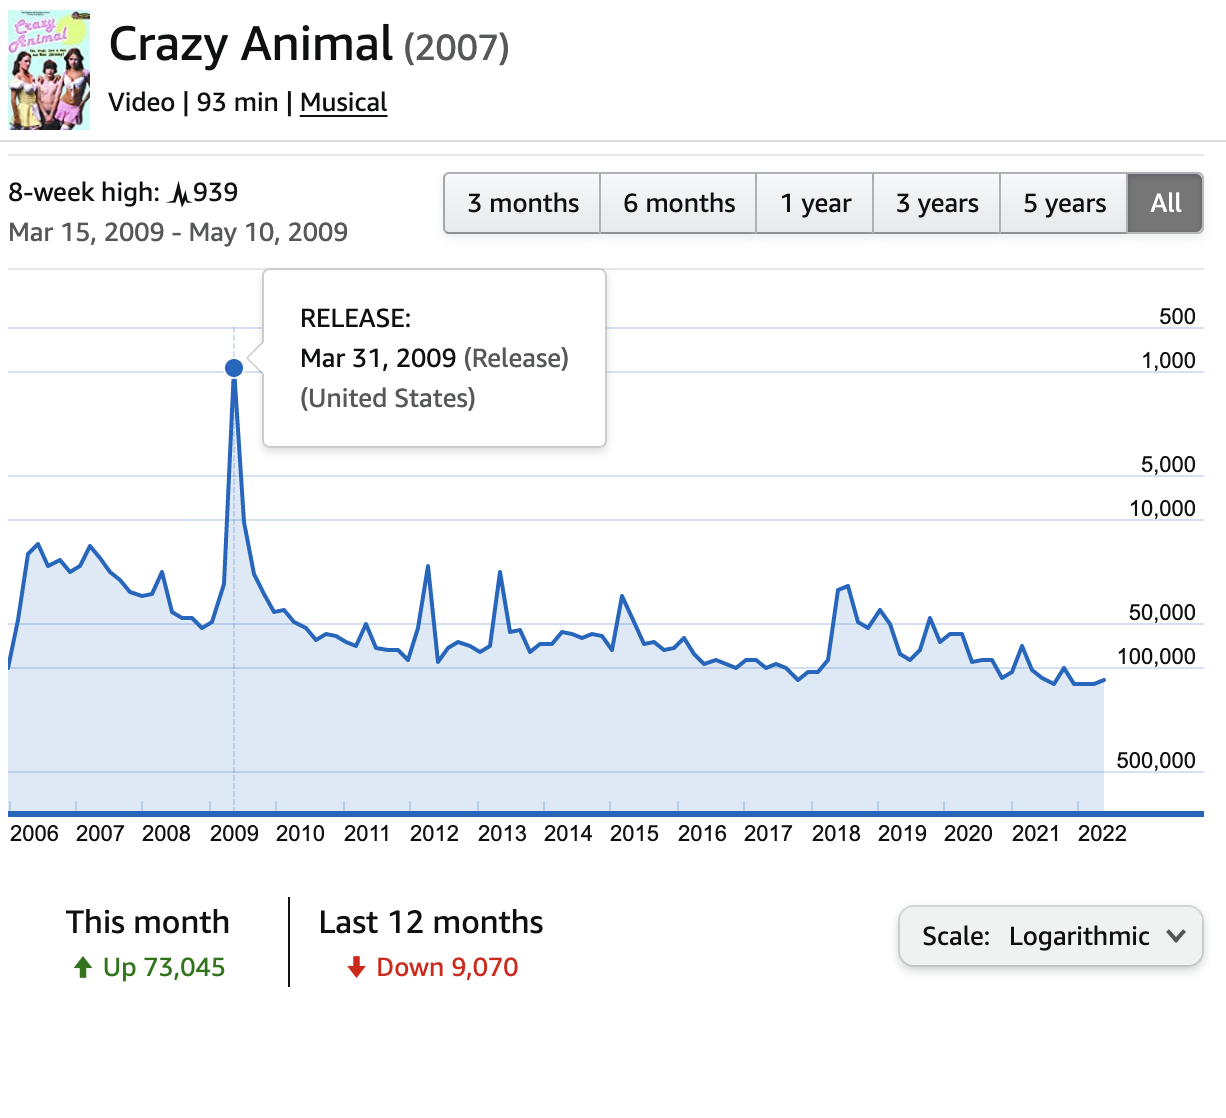 John Birmingham's movie Crazy Animal was the 939 most popular movie on the IMDb